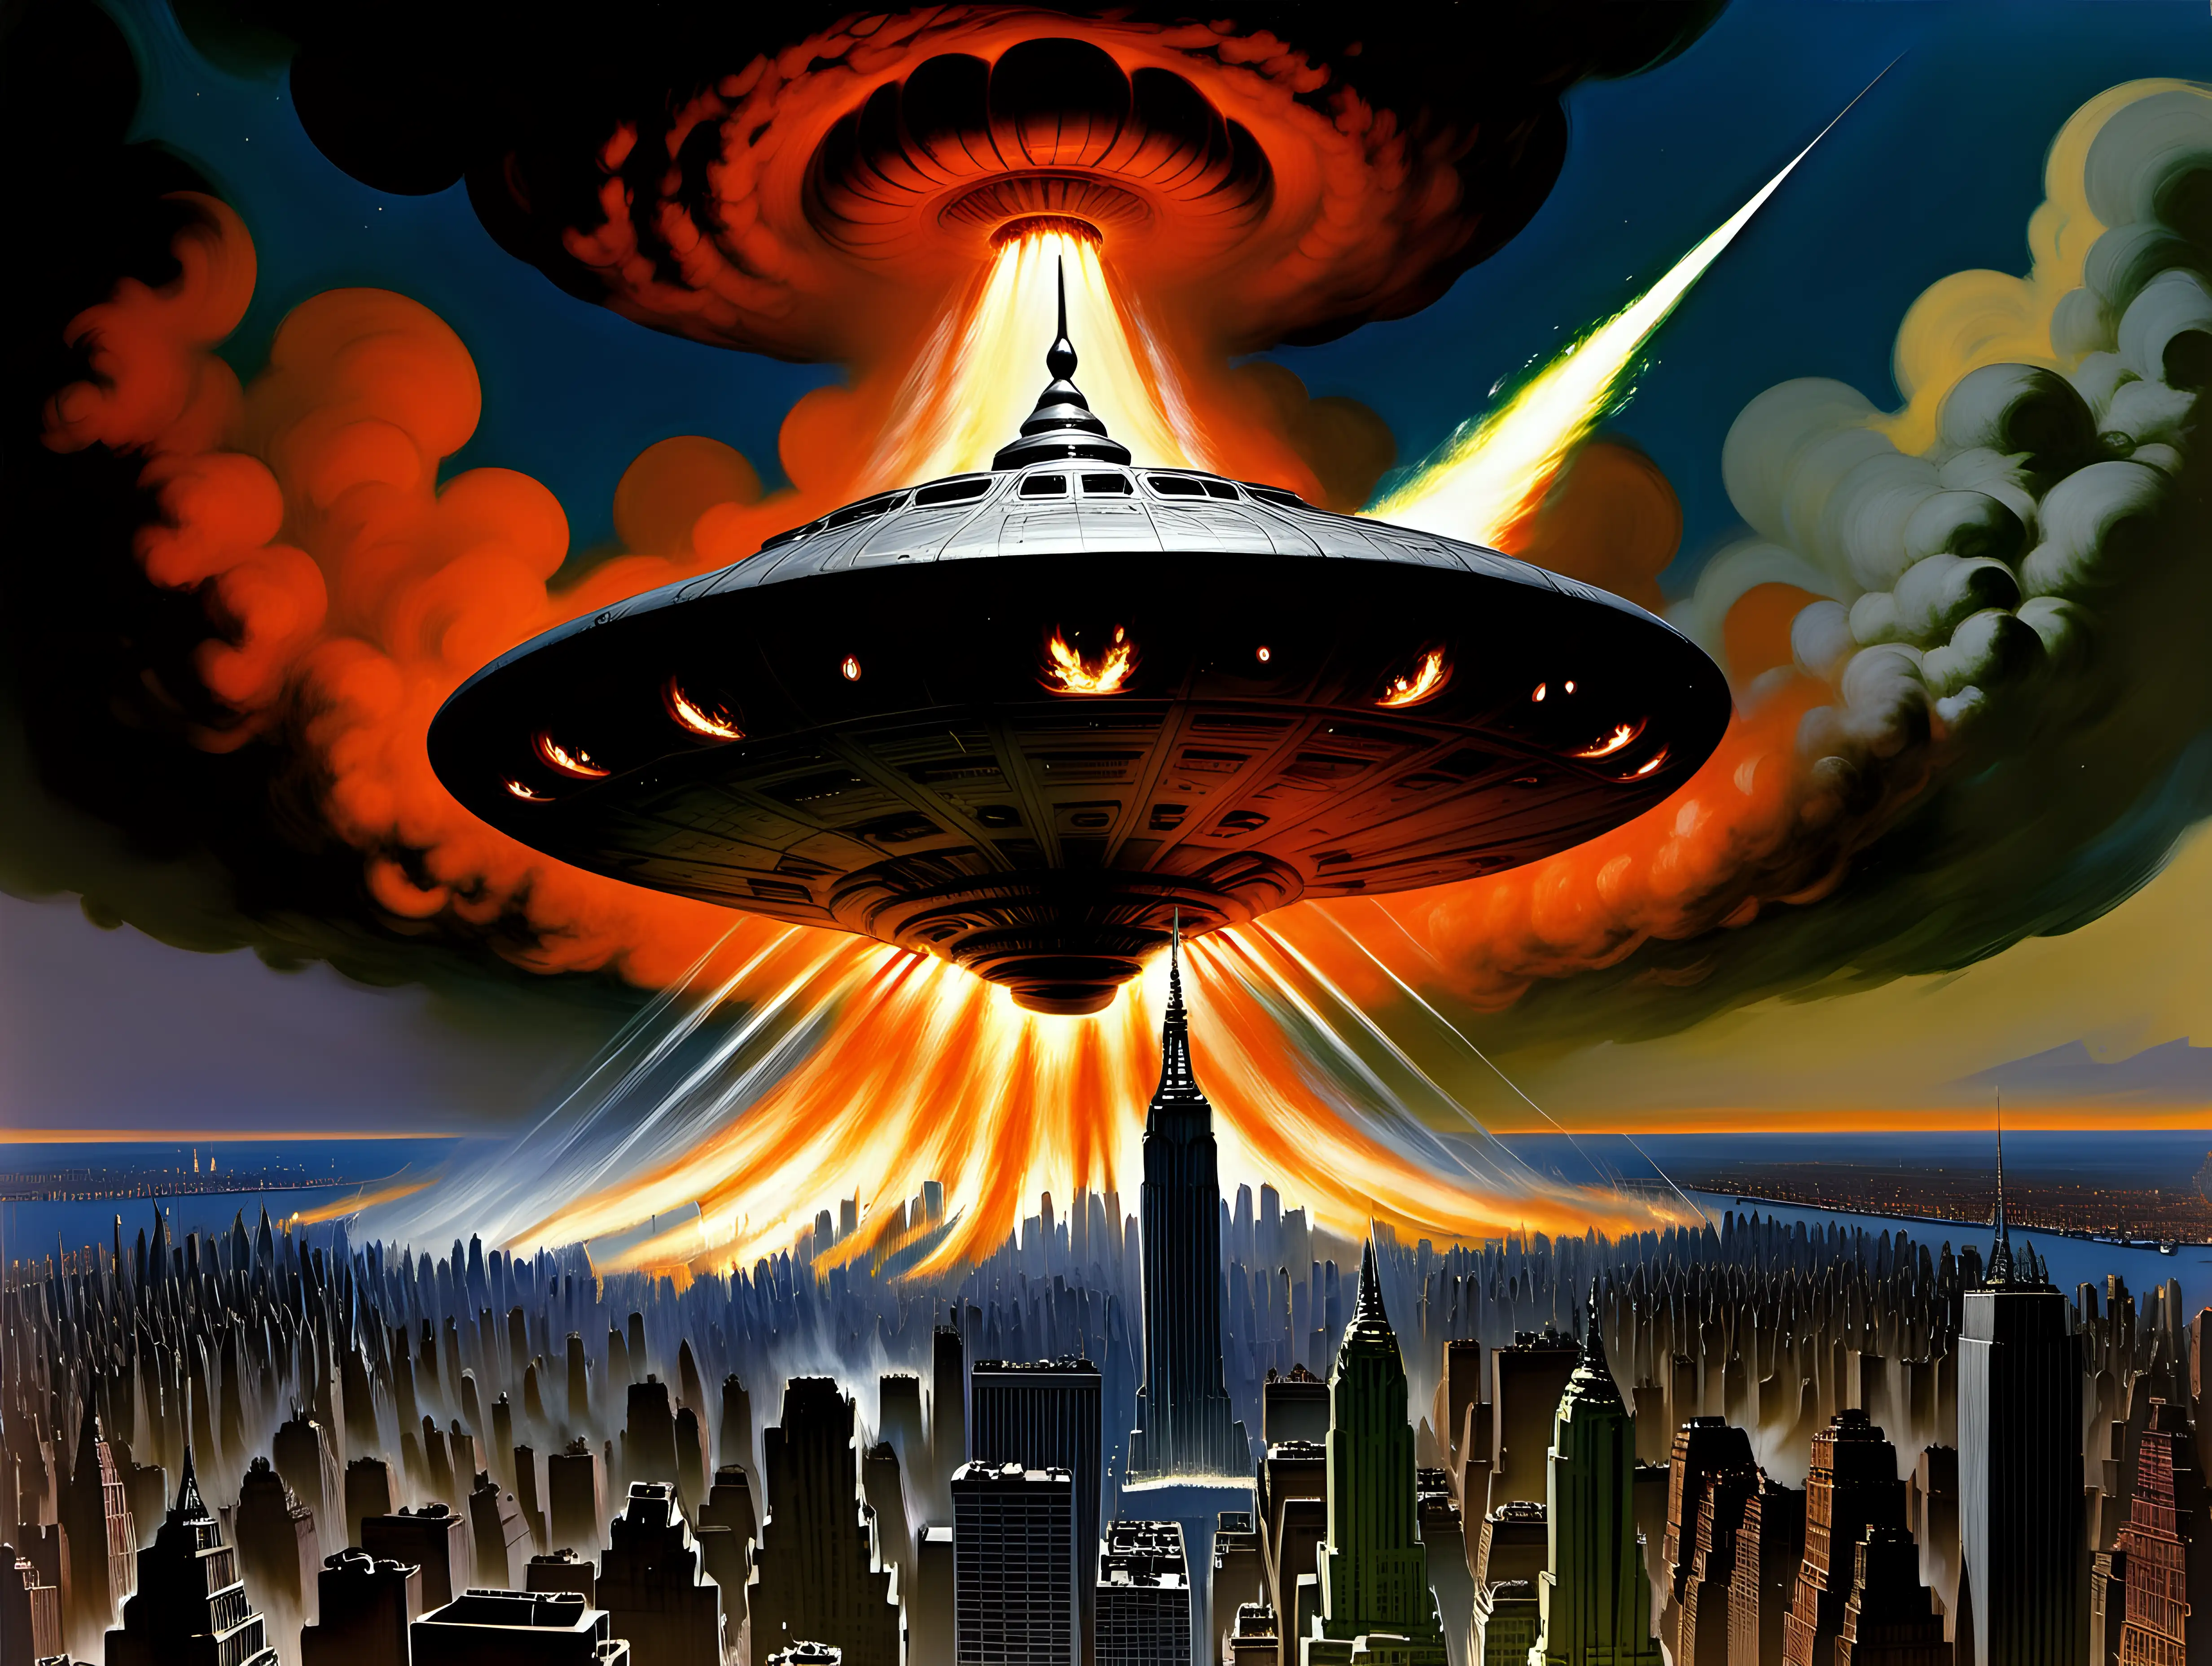 Fiery Alien Spaceship Assault on 1940s New York City Frank Frazetta Style